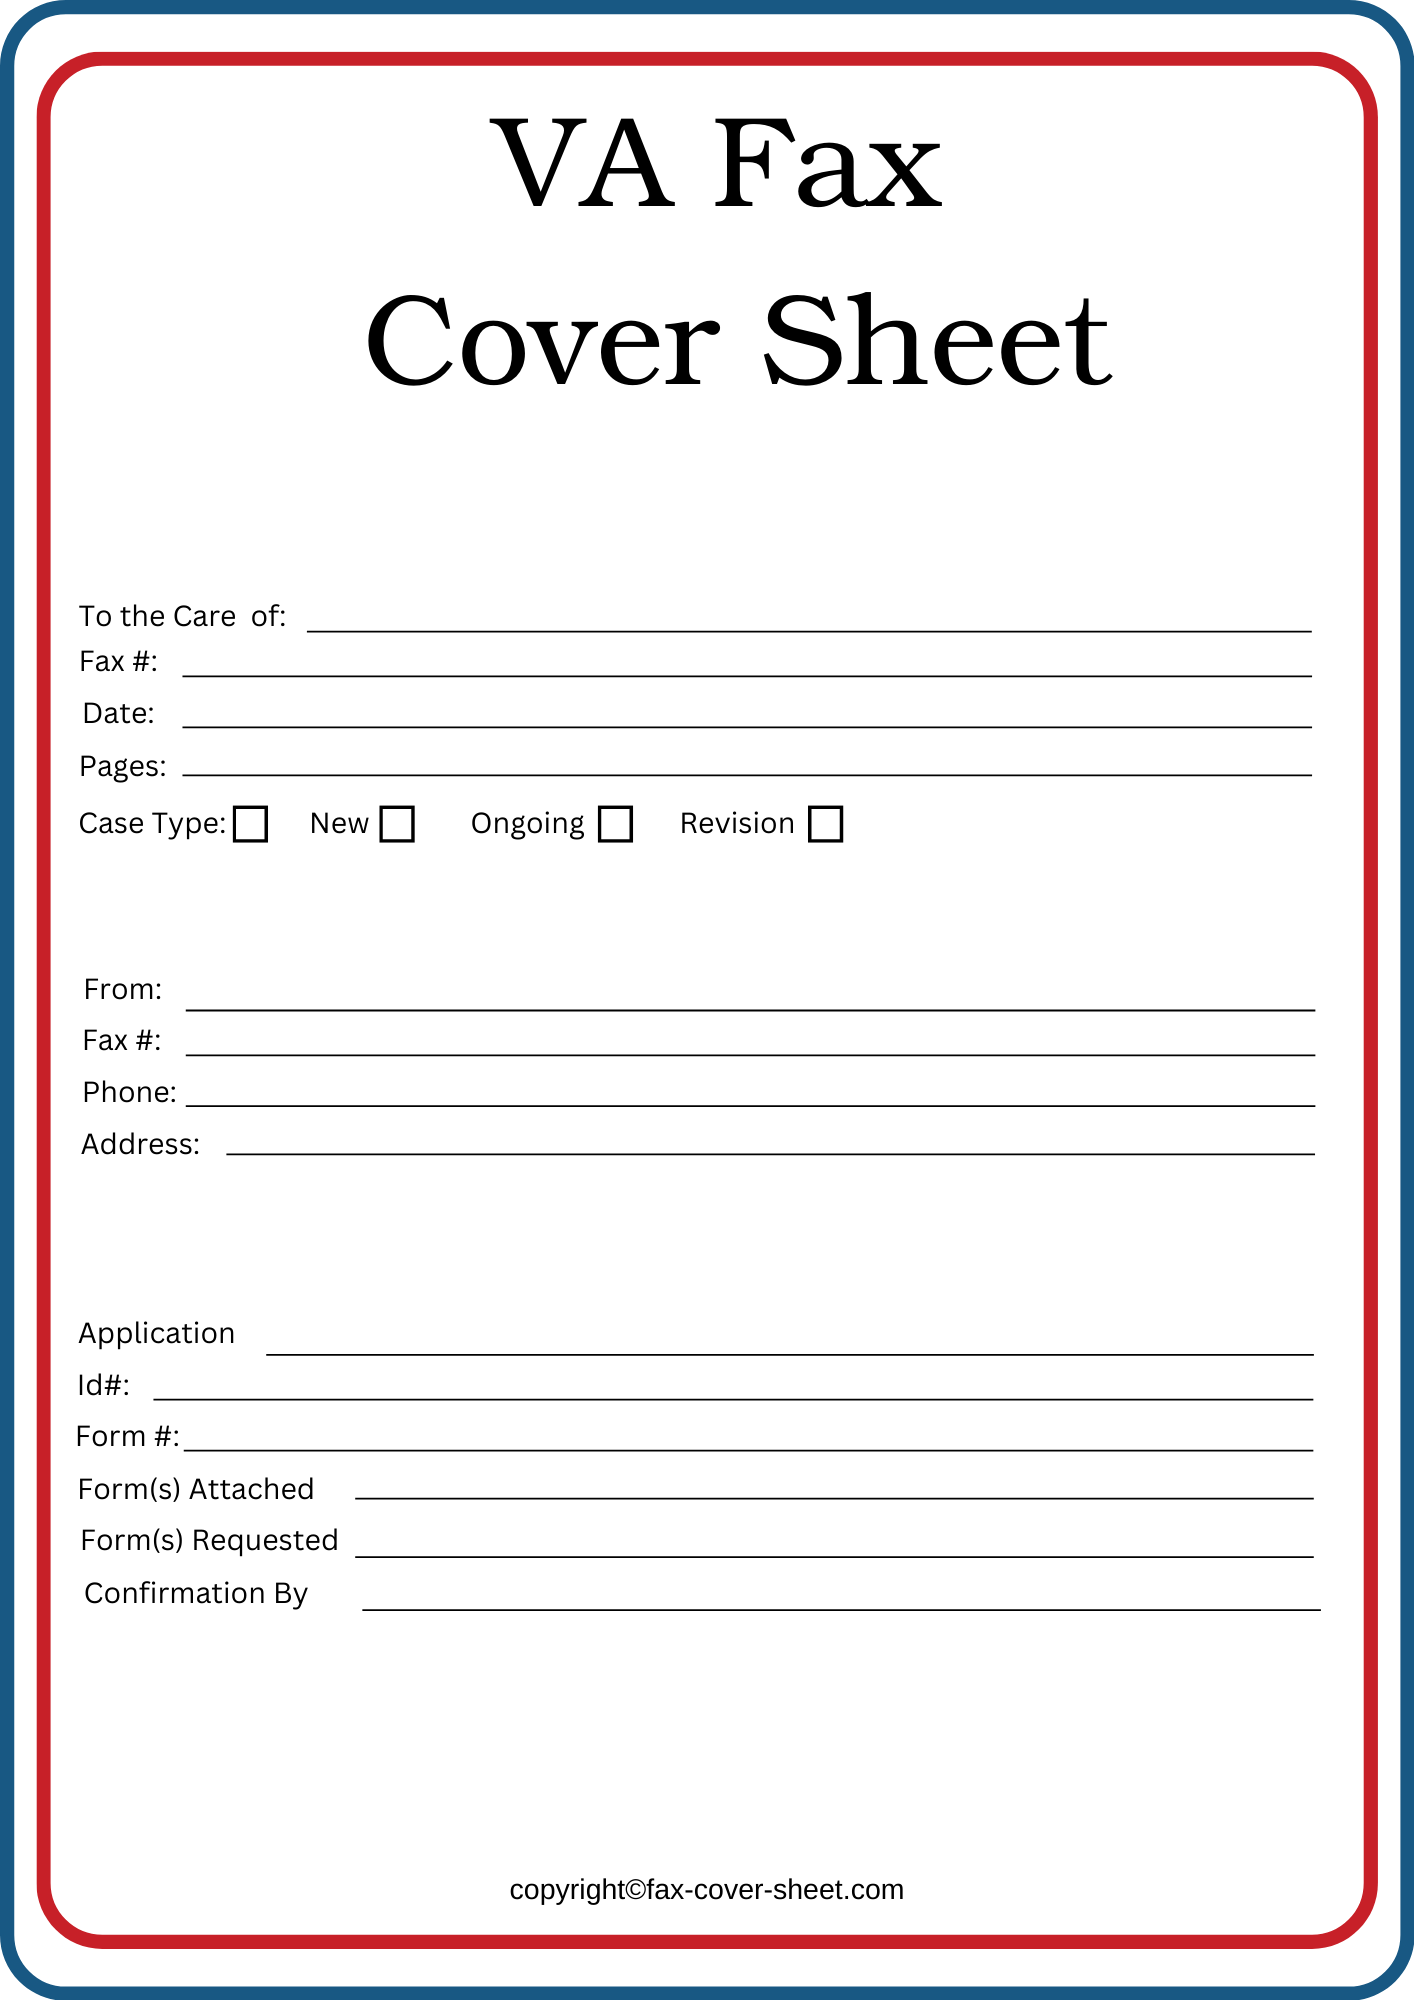 VA Claims Intake Center Fax Cover Sheet